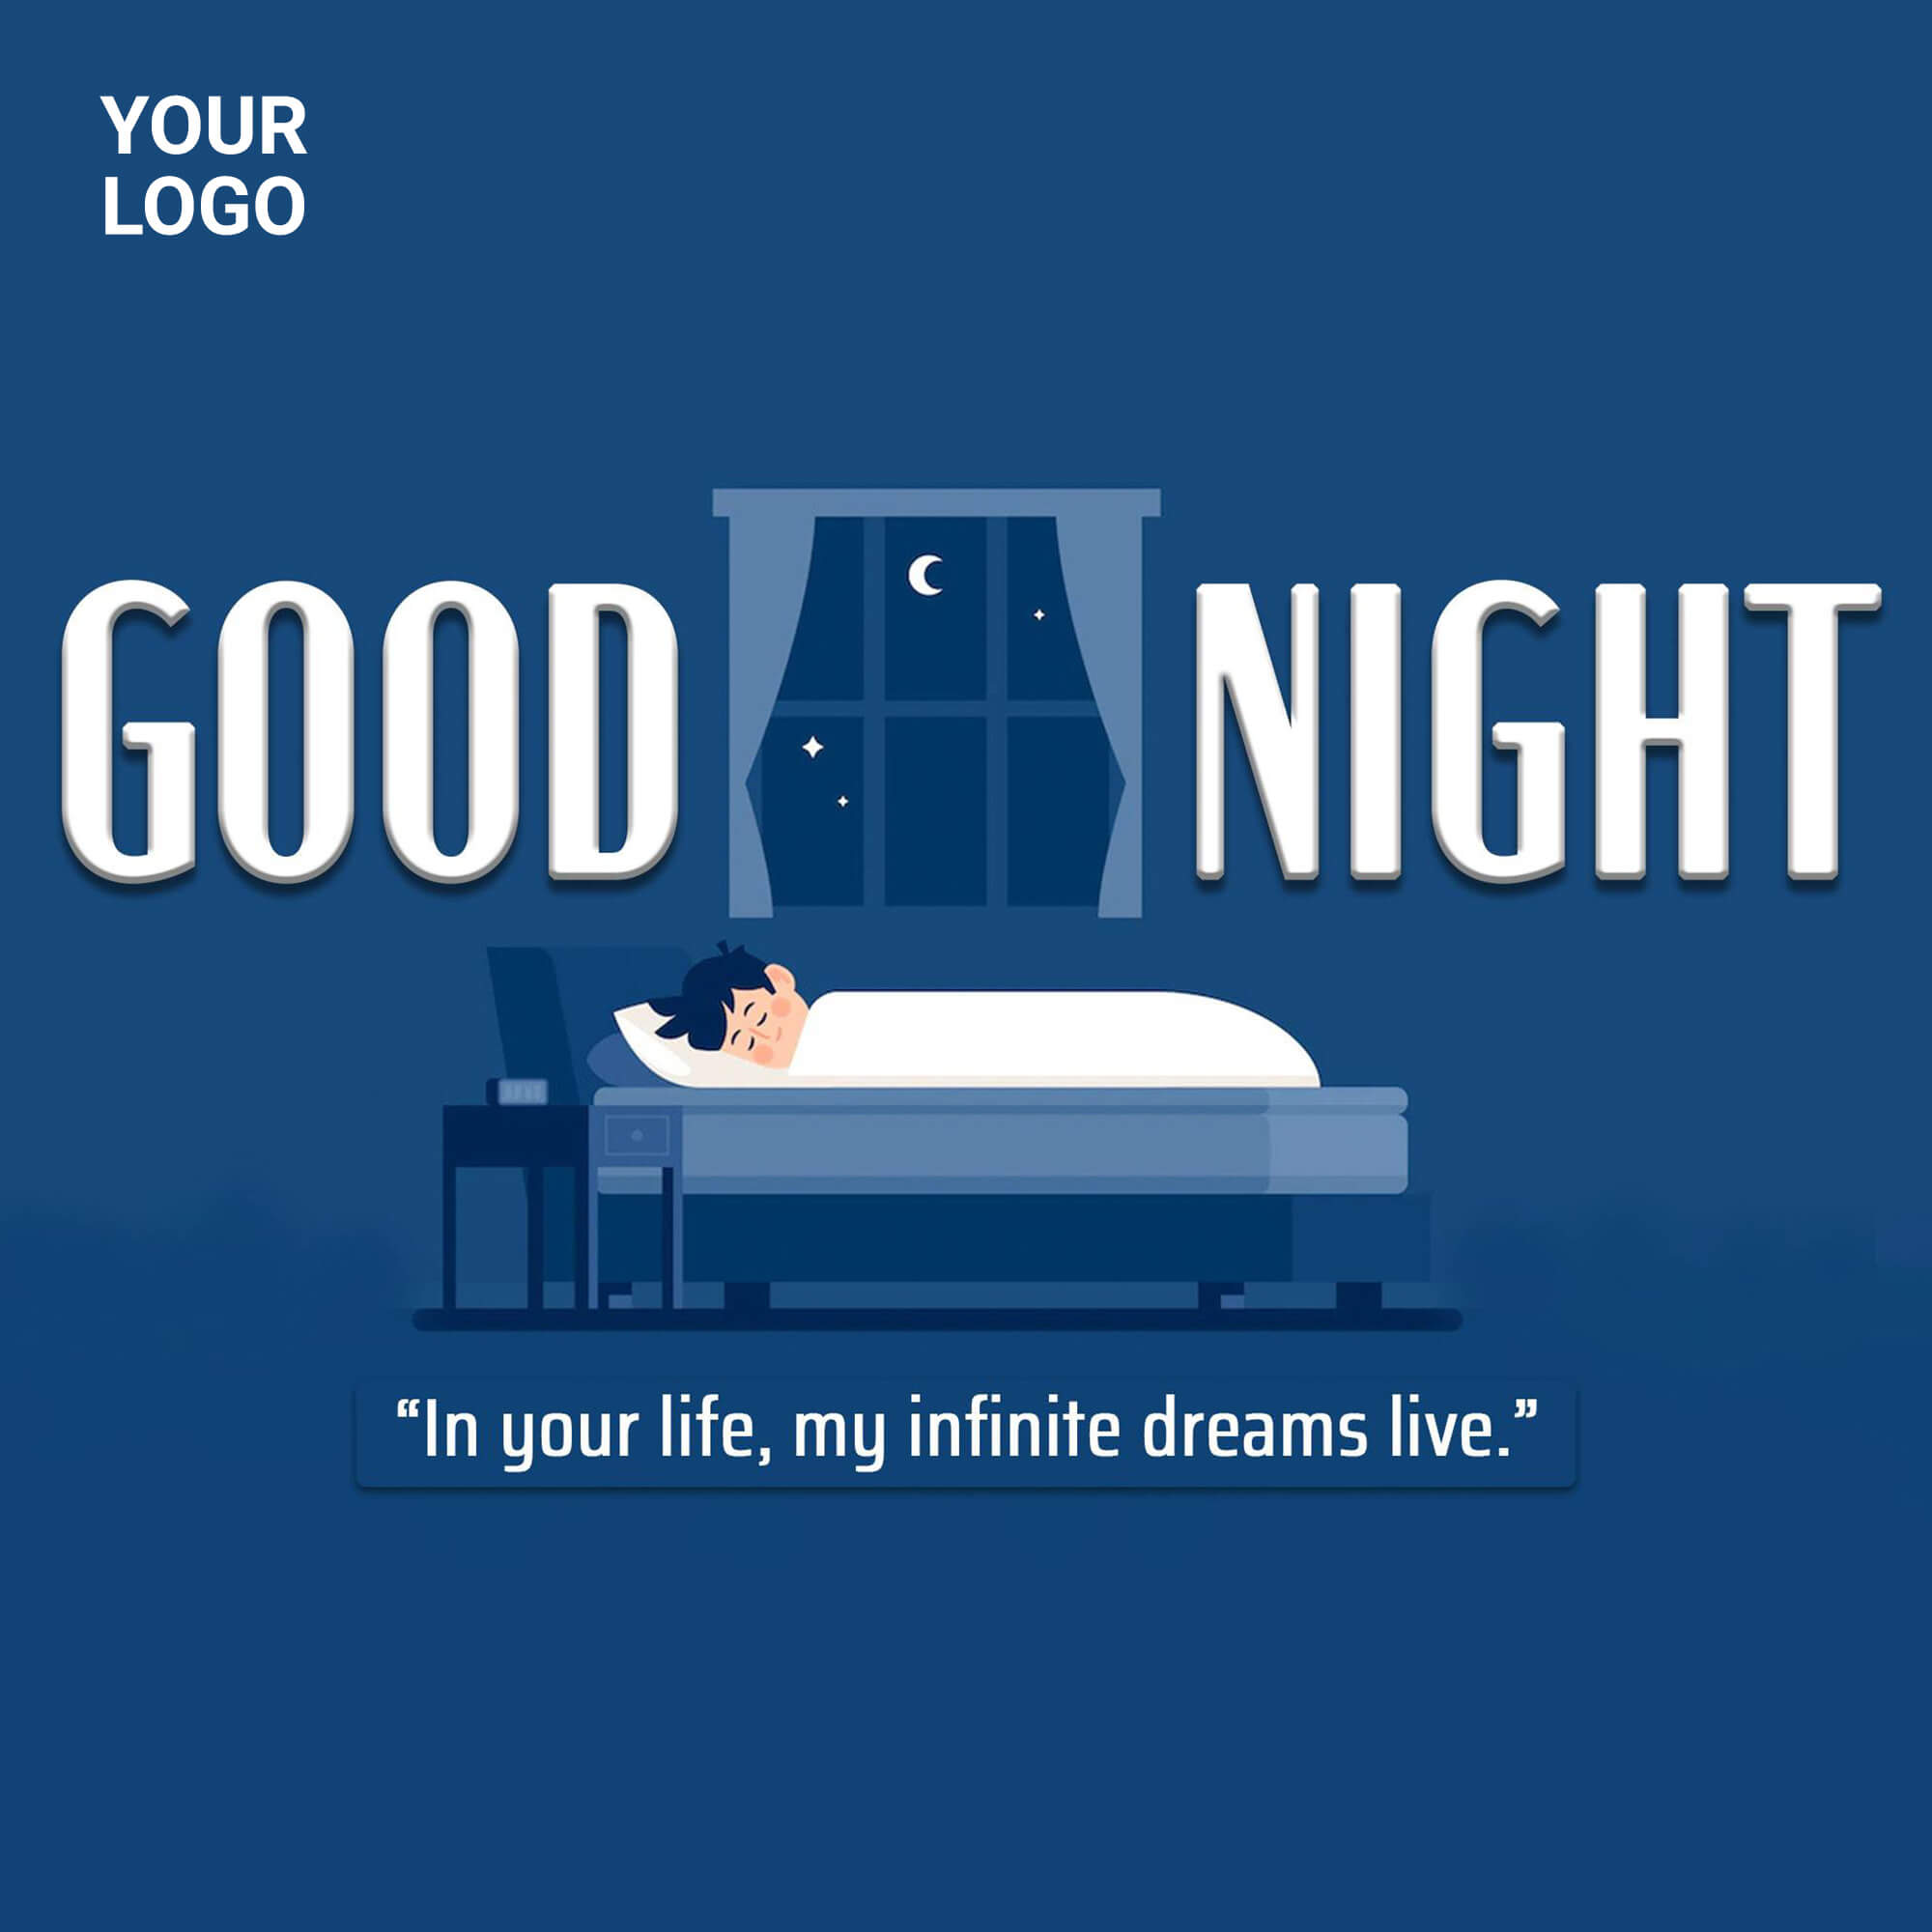 Good Night offer Poster Maker